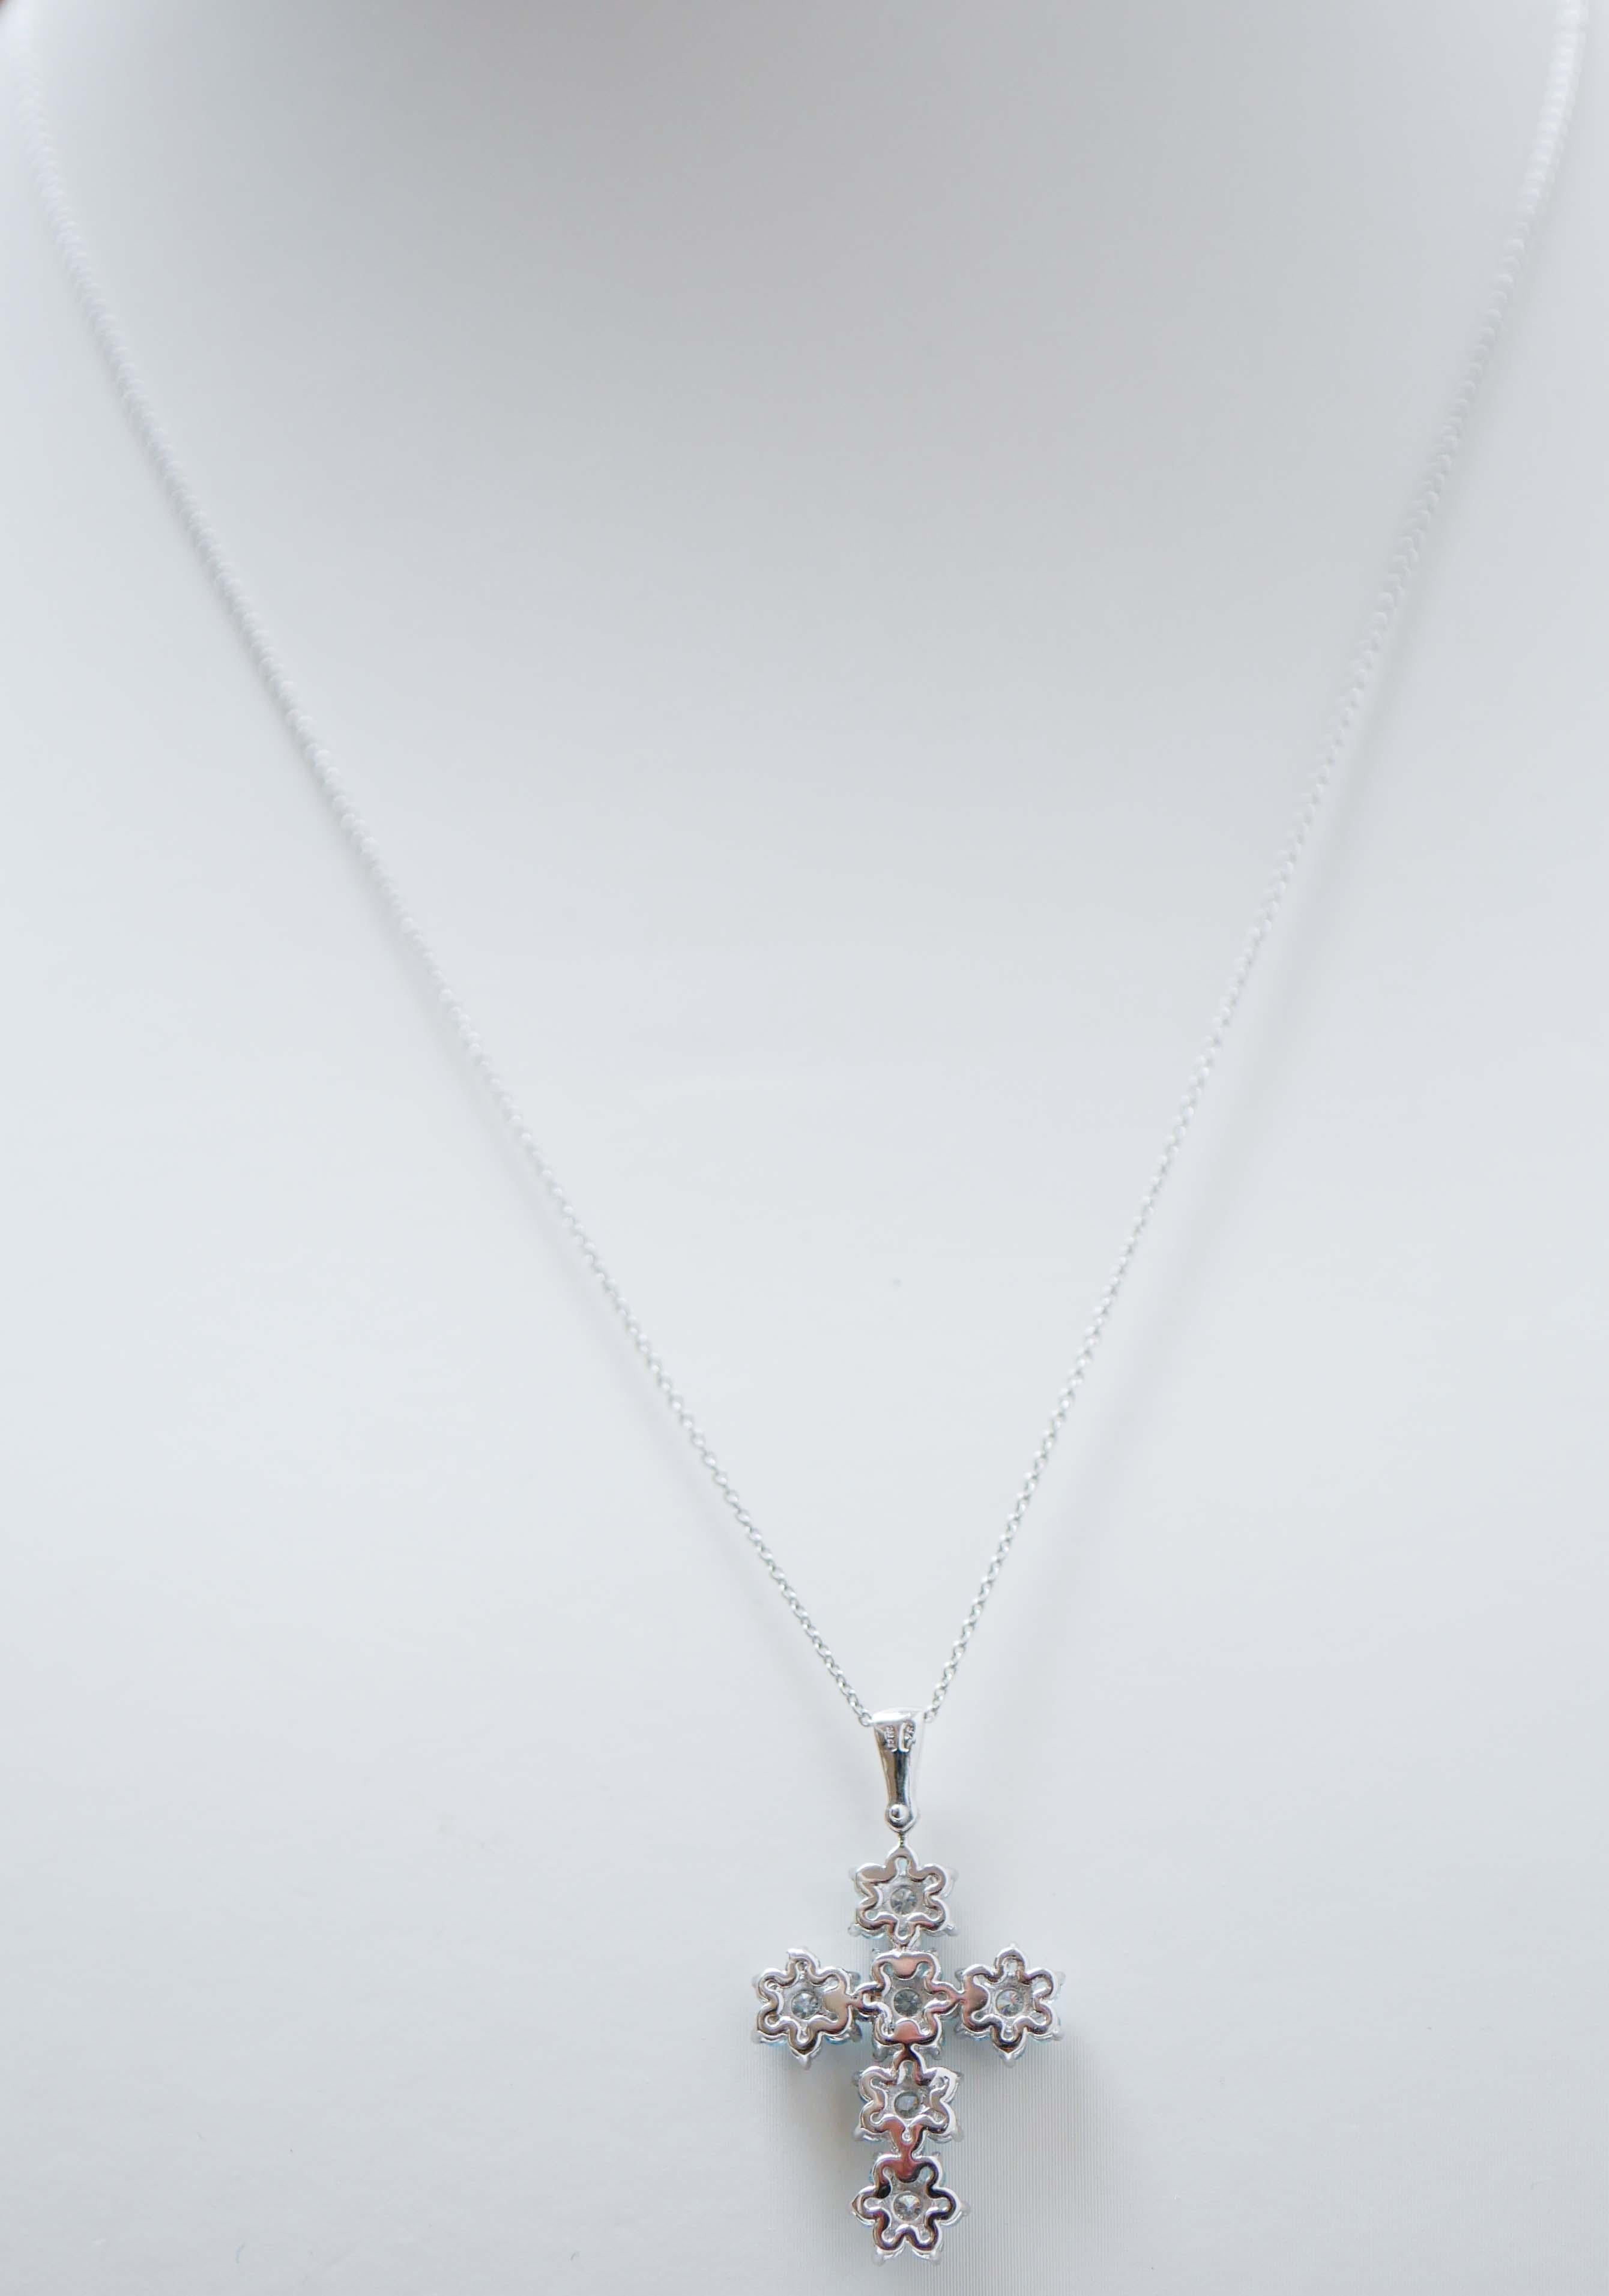 Mixed Cut Aquamarine, Diamonds, 18 Karat White Gold Pendant Necklace.